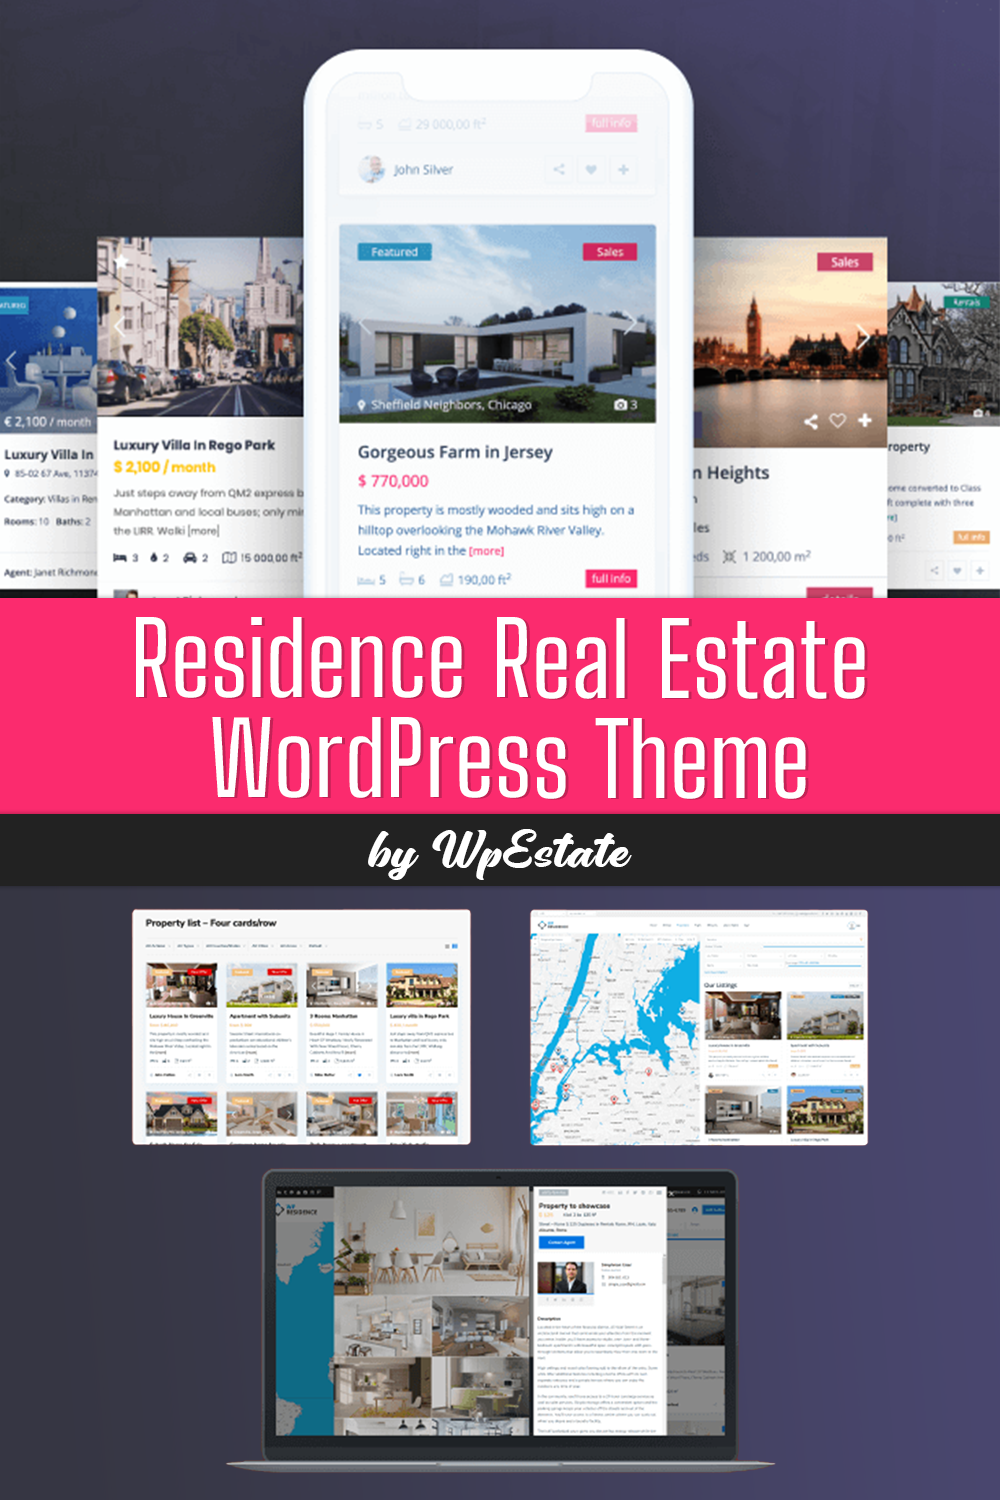 Pinterest of residence real estate wordpress theme.